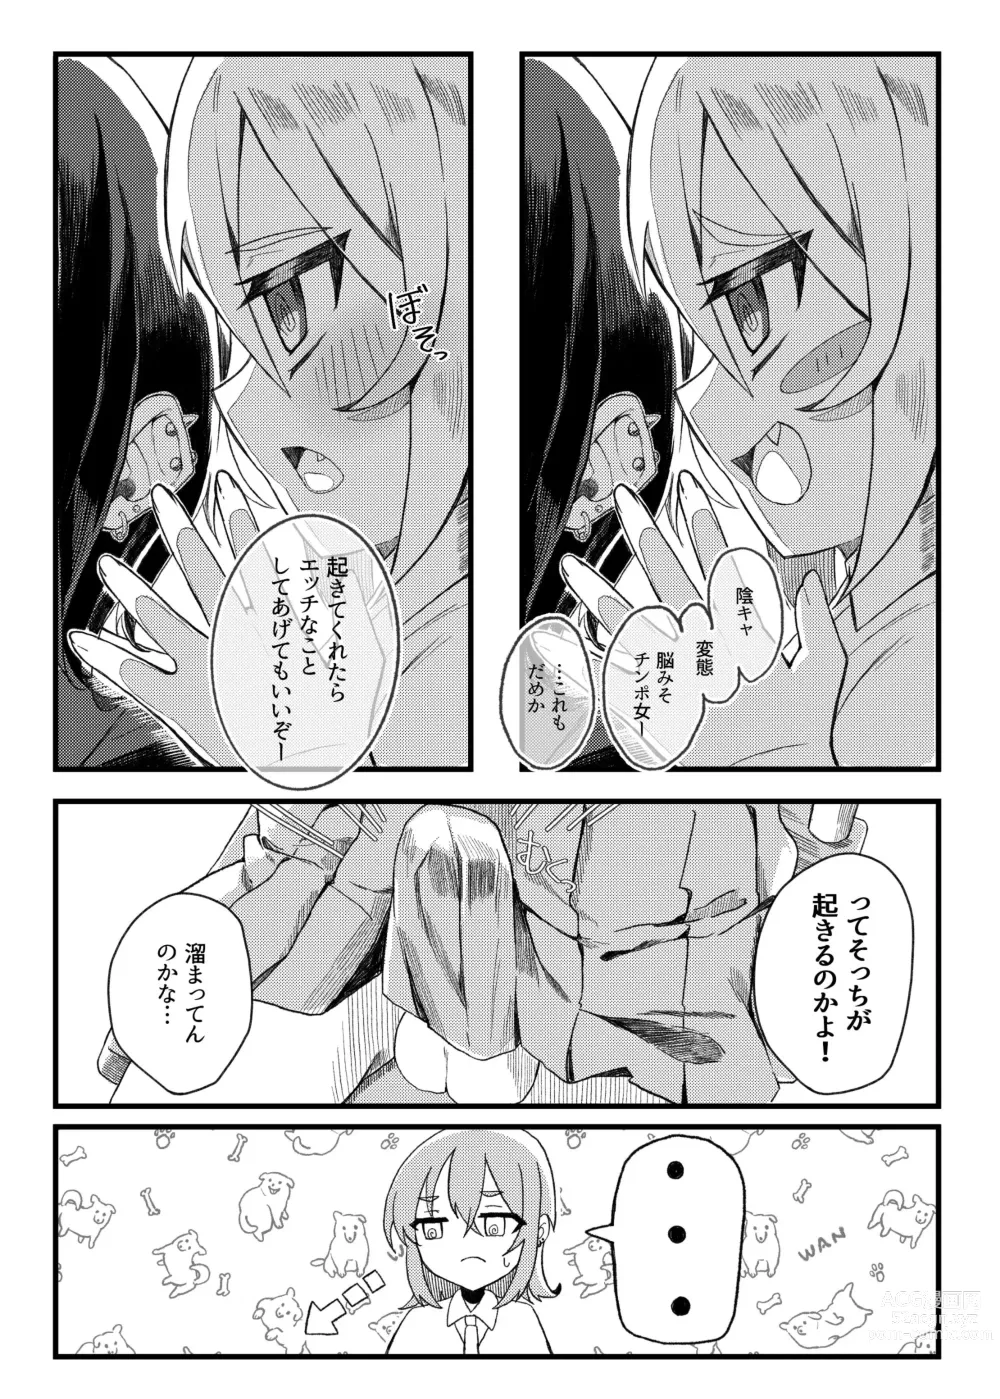 Page 5 of doujinshi Konishi to Onishi